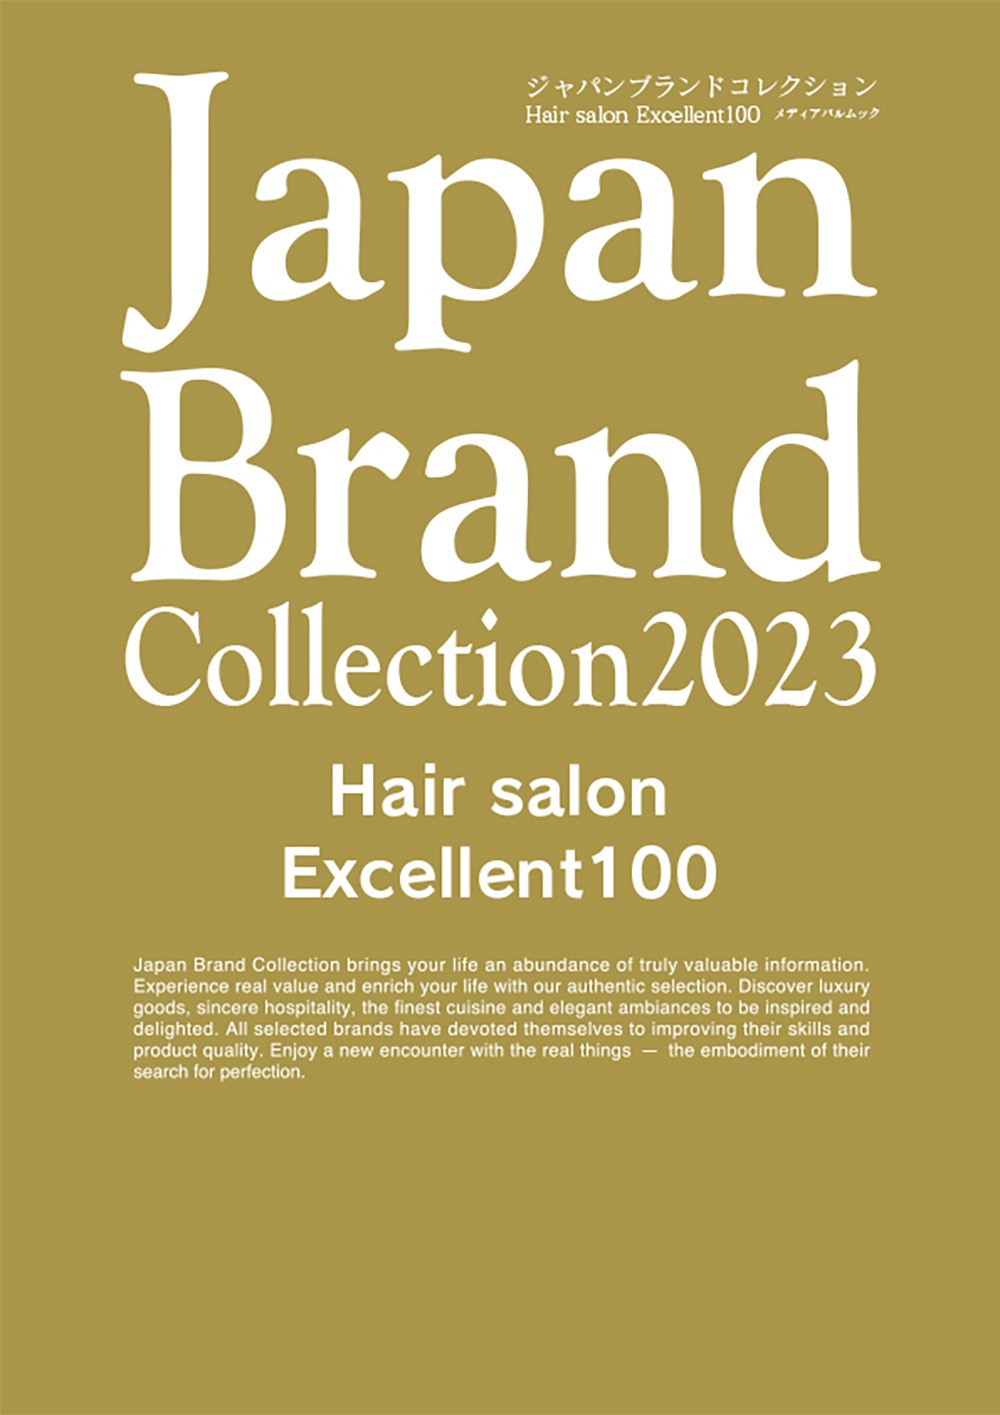 Japan Brand Collection2023 Hair Salon Excellent100